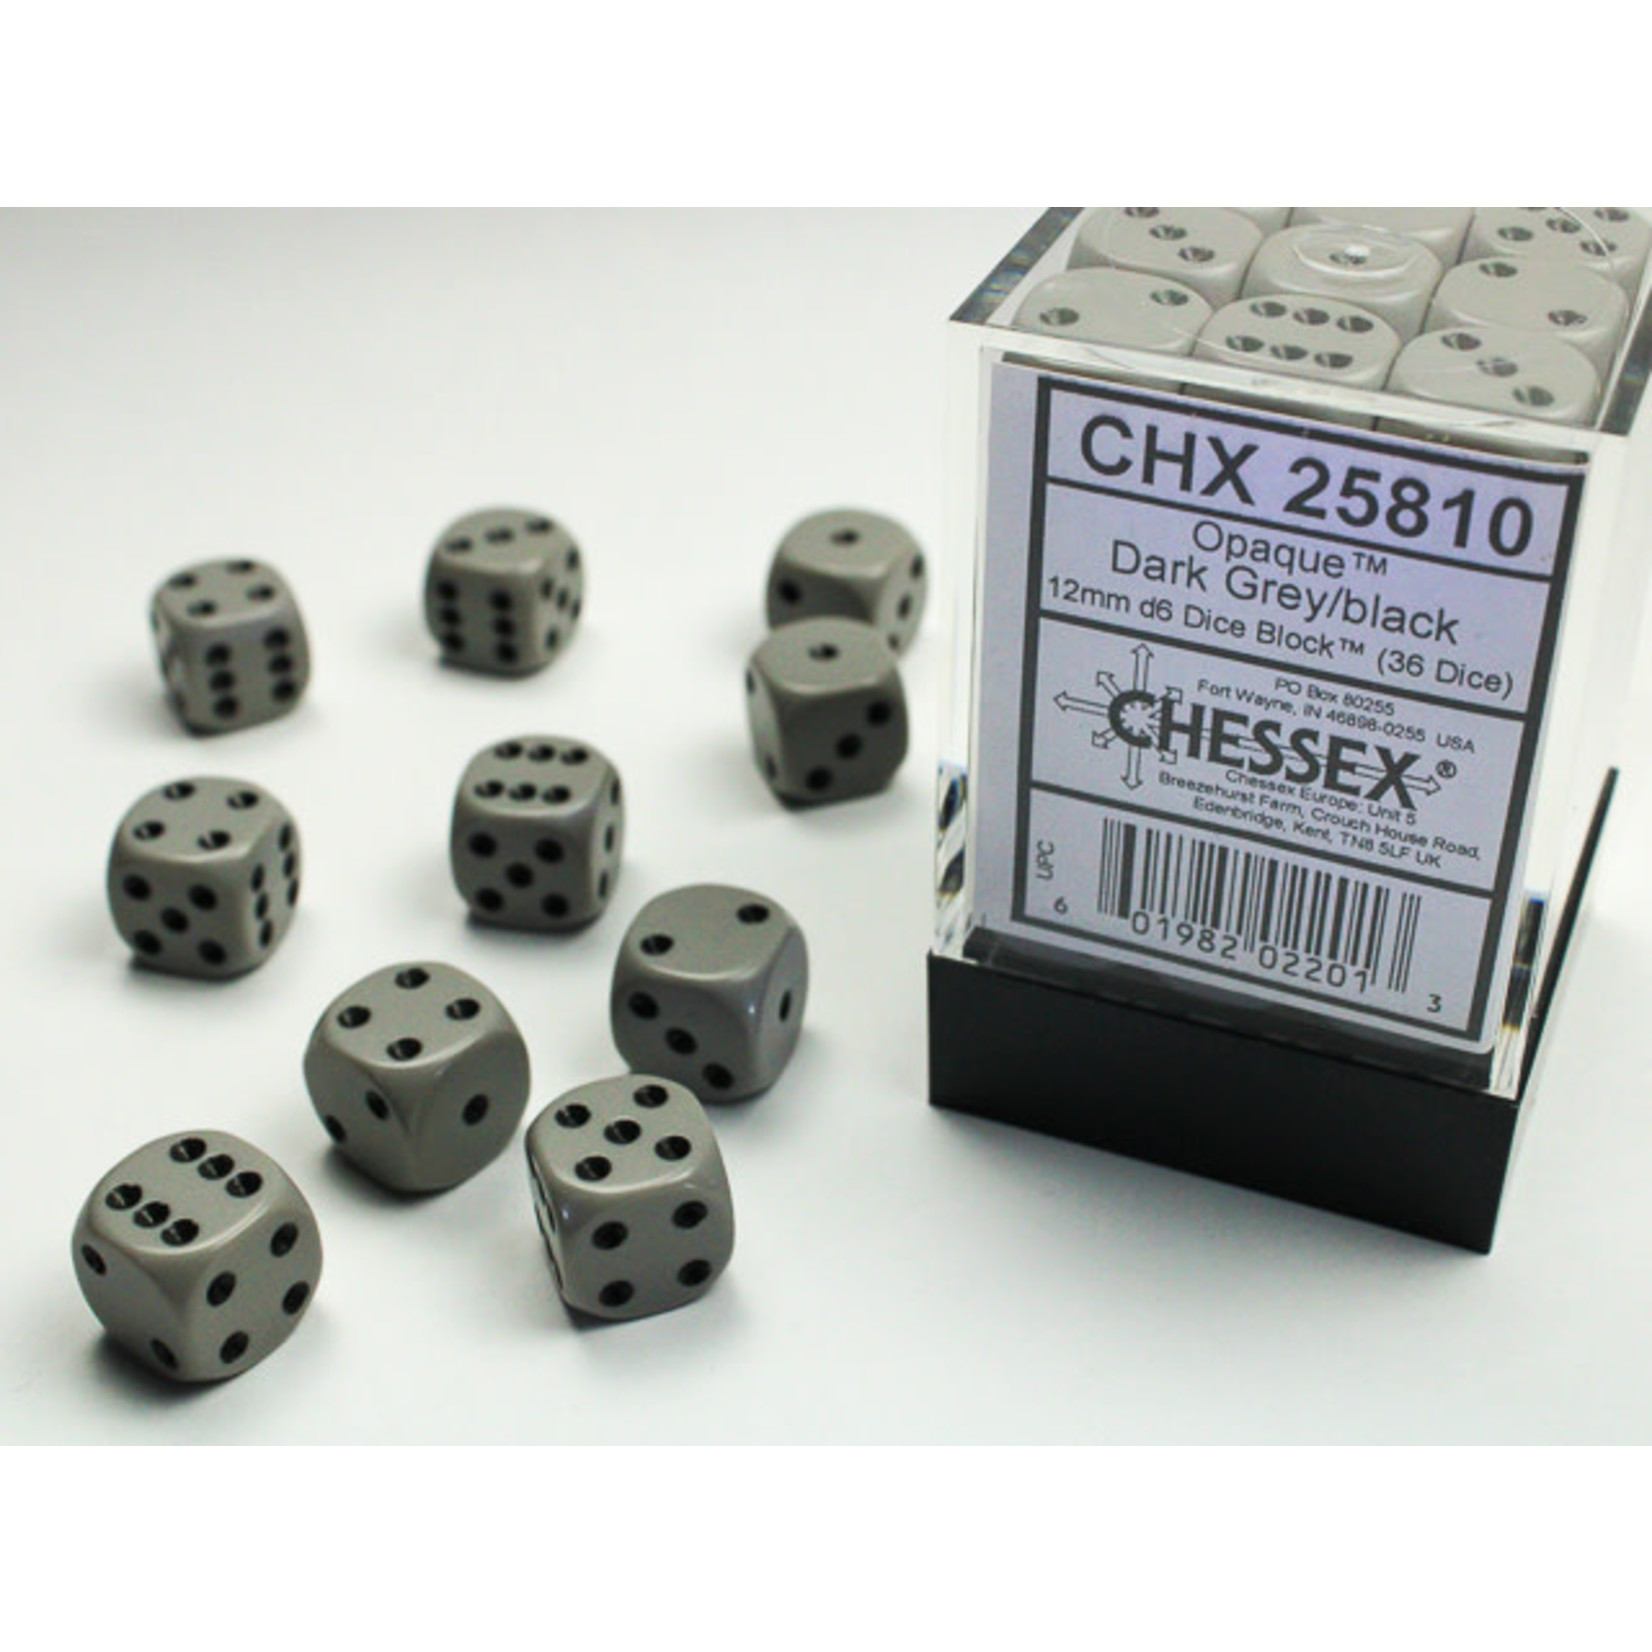 Chessex Dice 12mm 25810 36pc Opaque Grey/Black